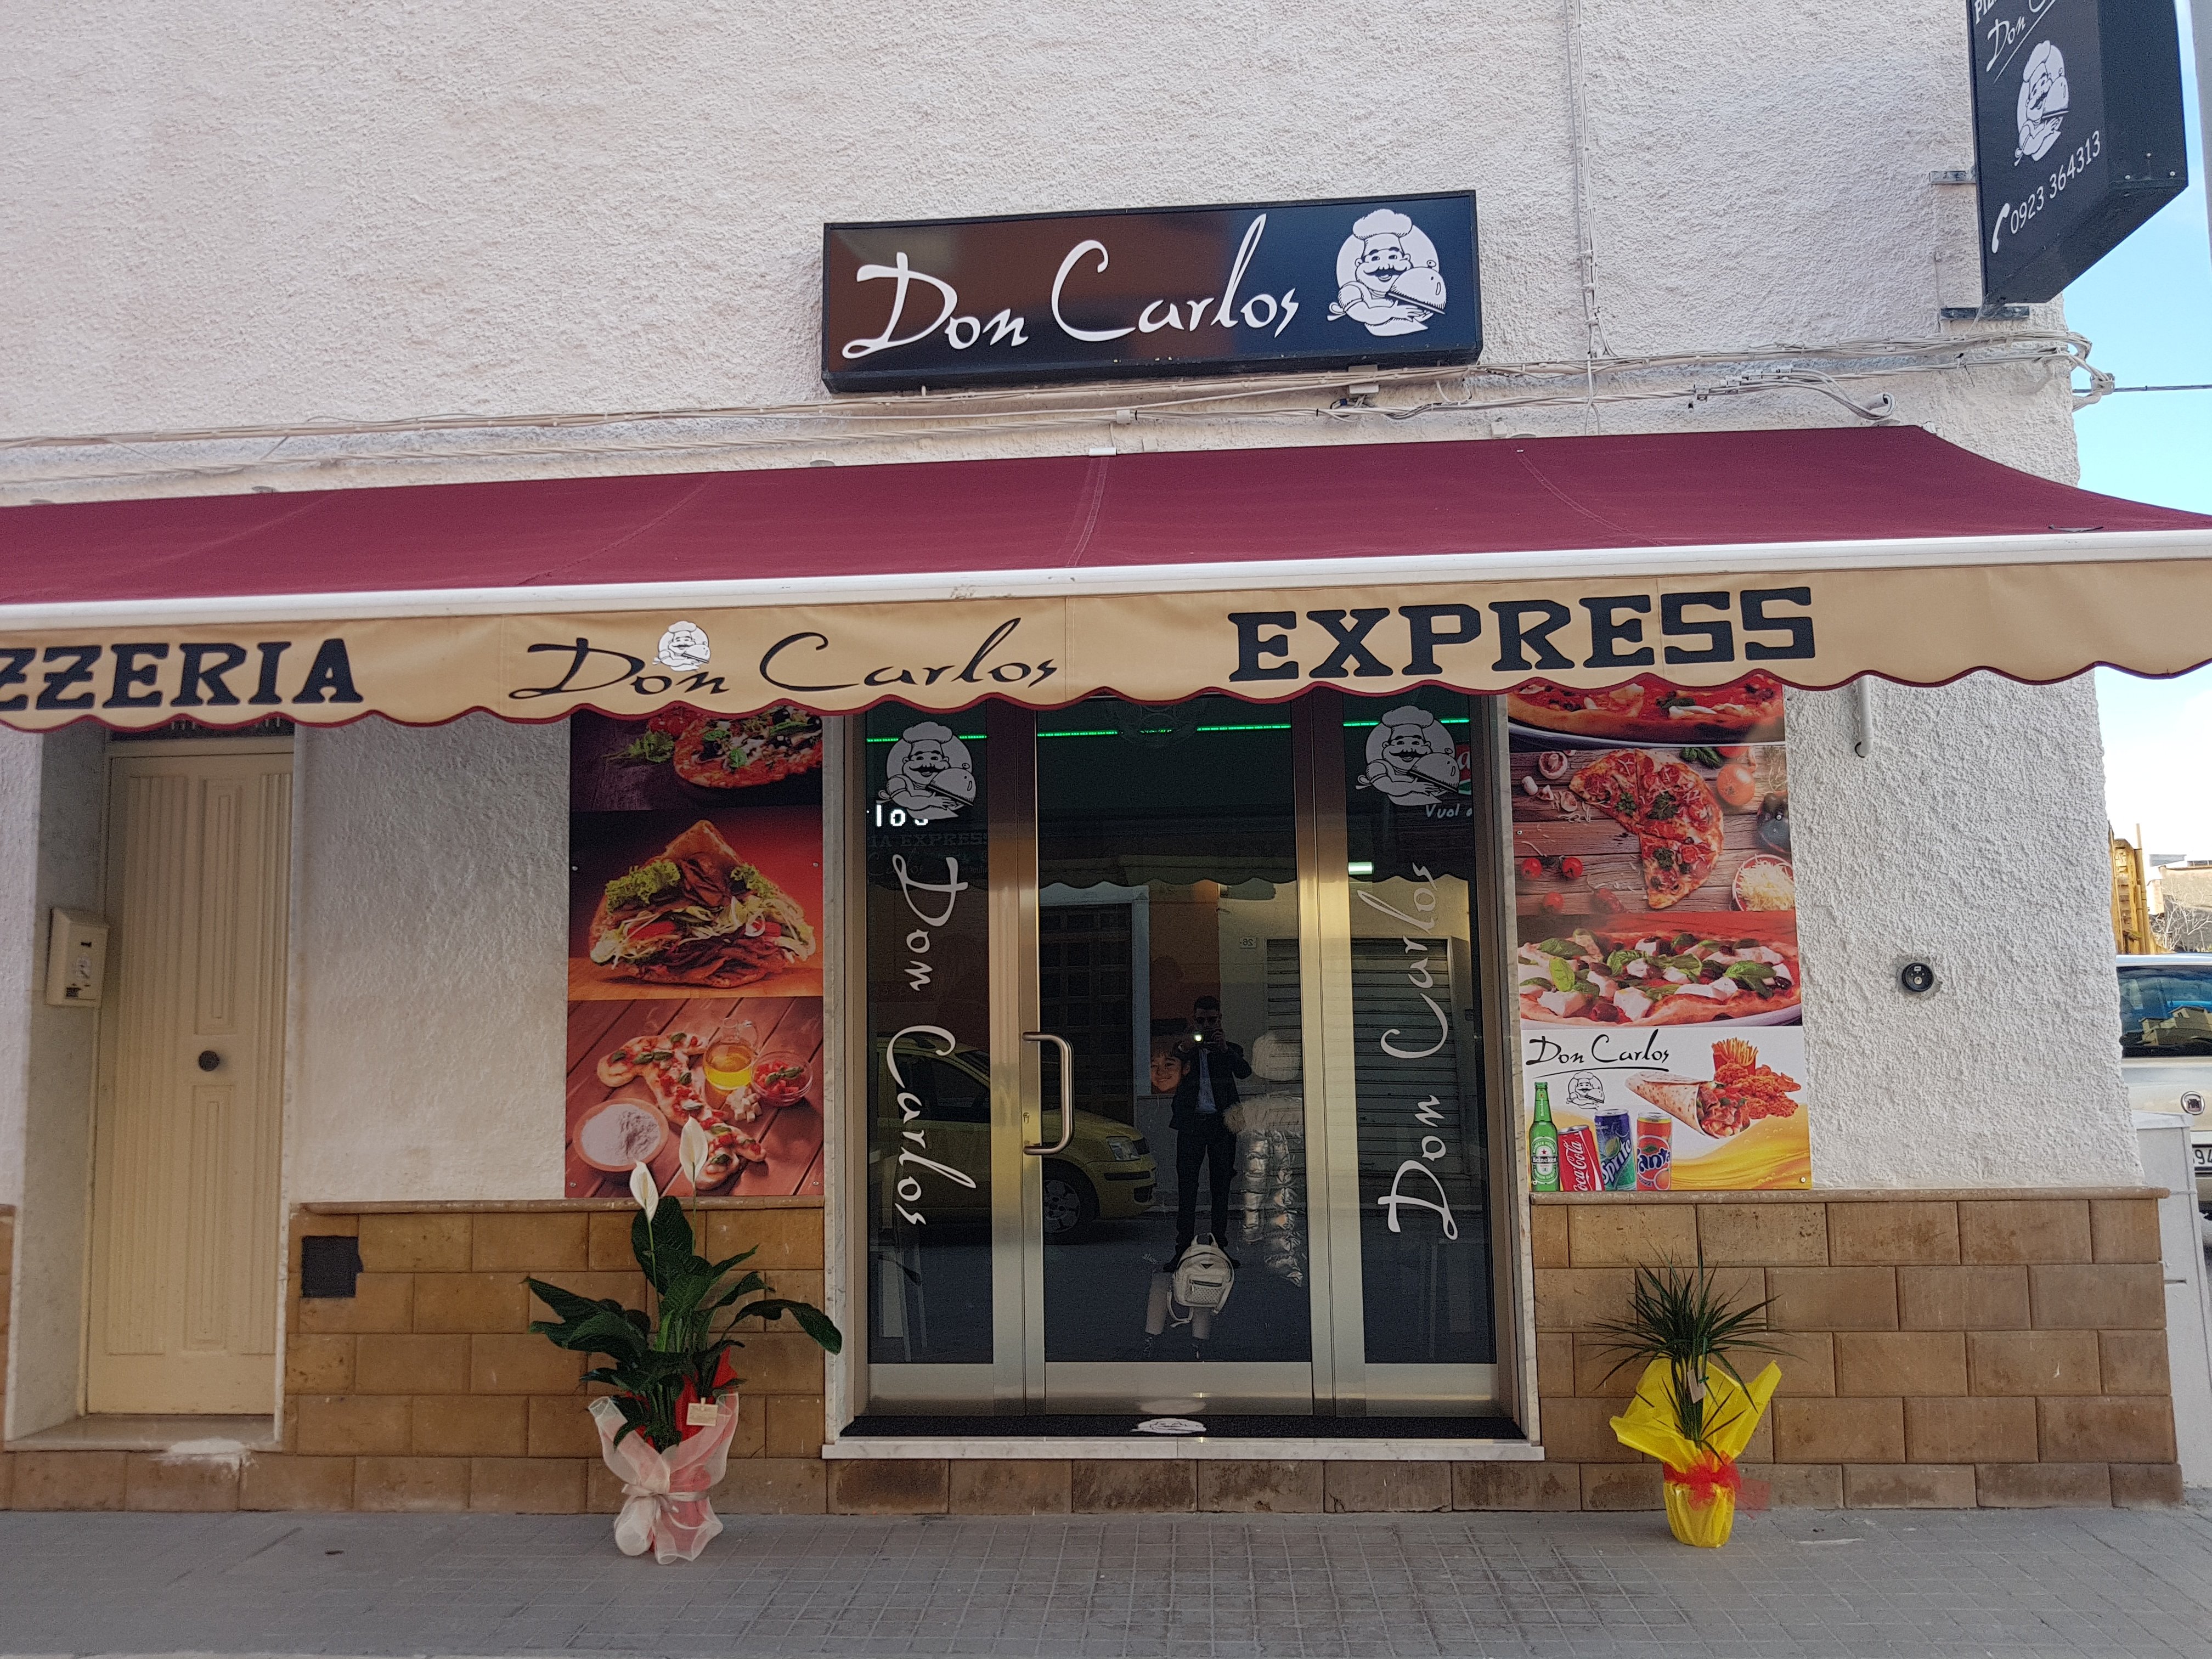 Pizzeria Express Don Carlos, Mazara del Vallo